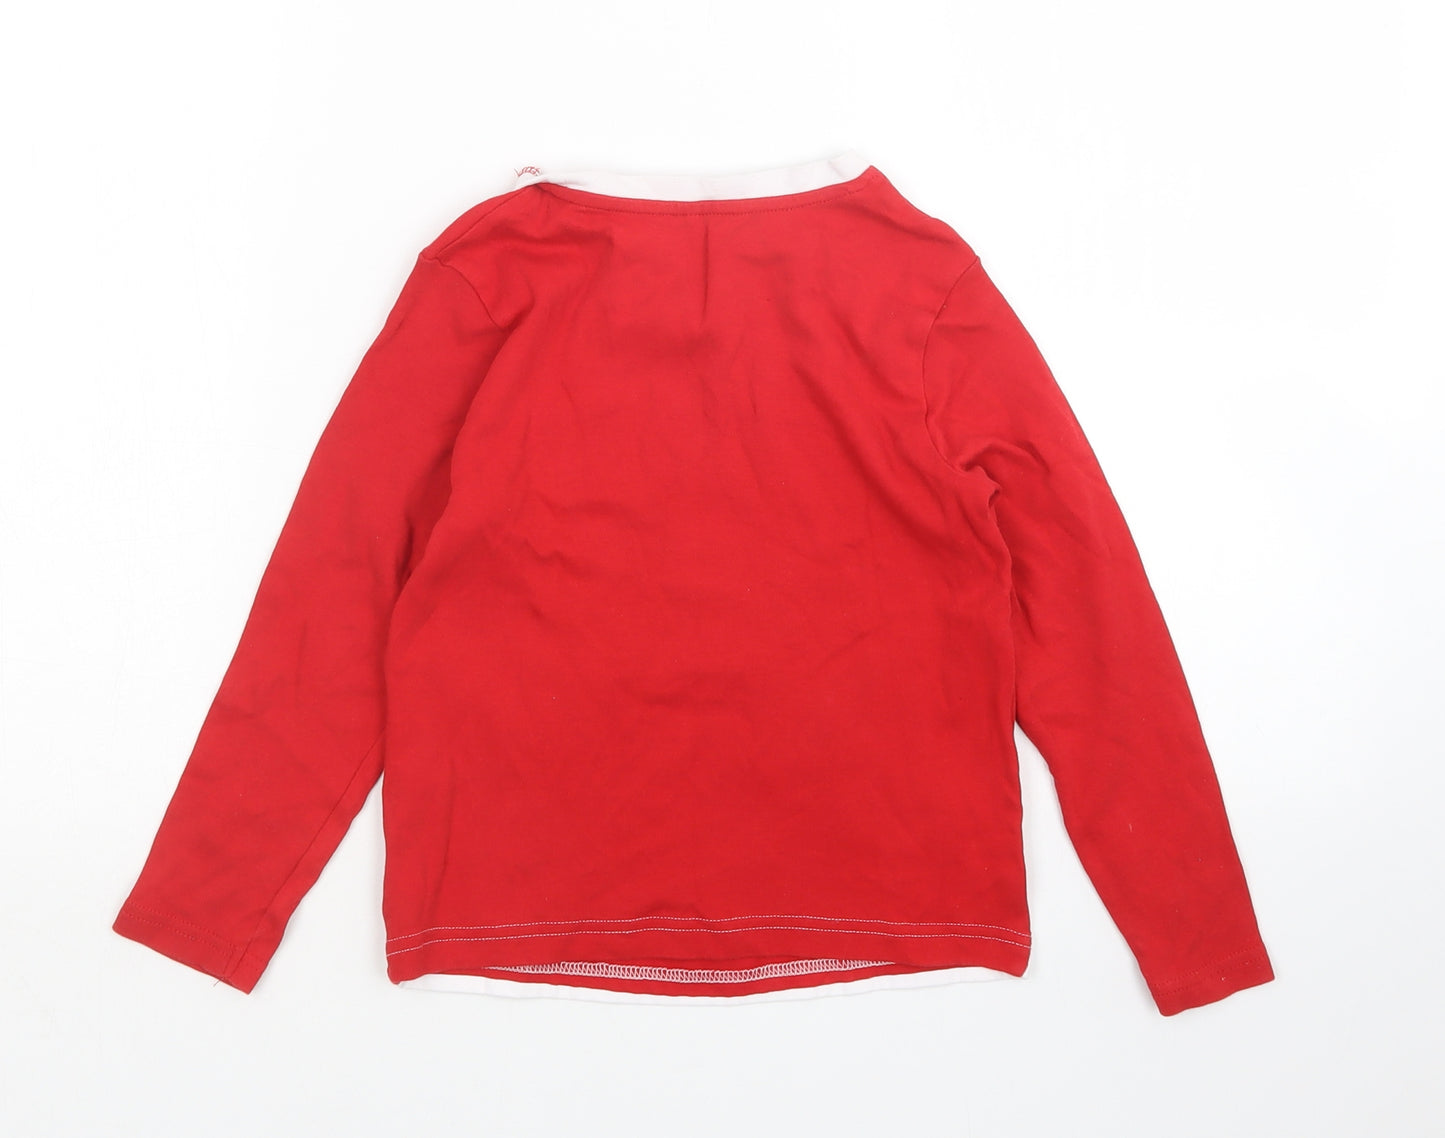 George Boys Red    Pyjama Top Size 5-6 Years  - Christmas